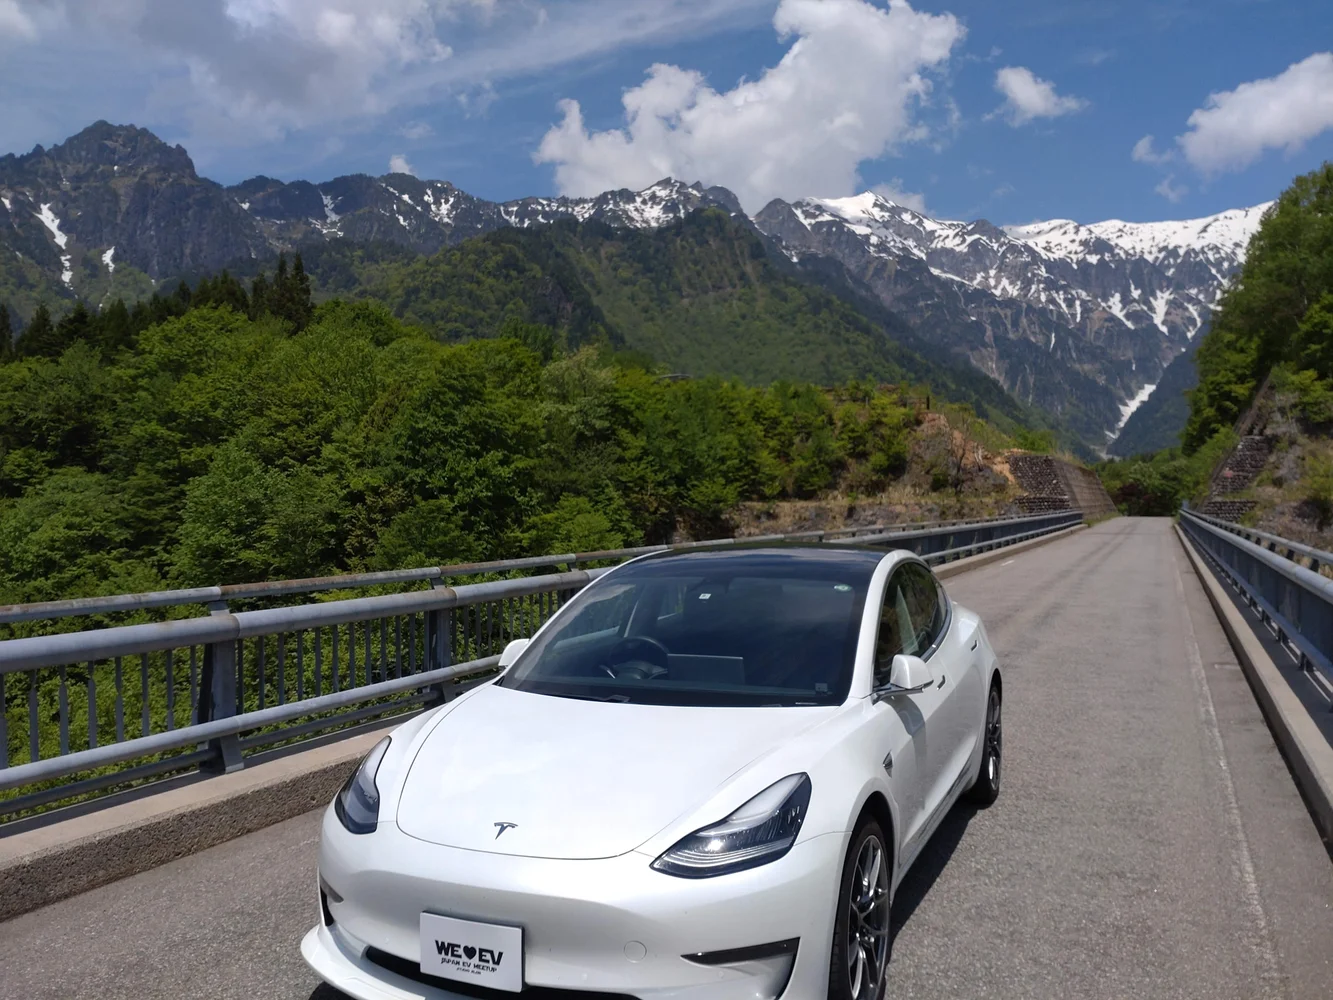 Deep Sightseeing in Gifu with a Tesla Rental Car from Gifu Hashima